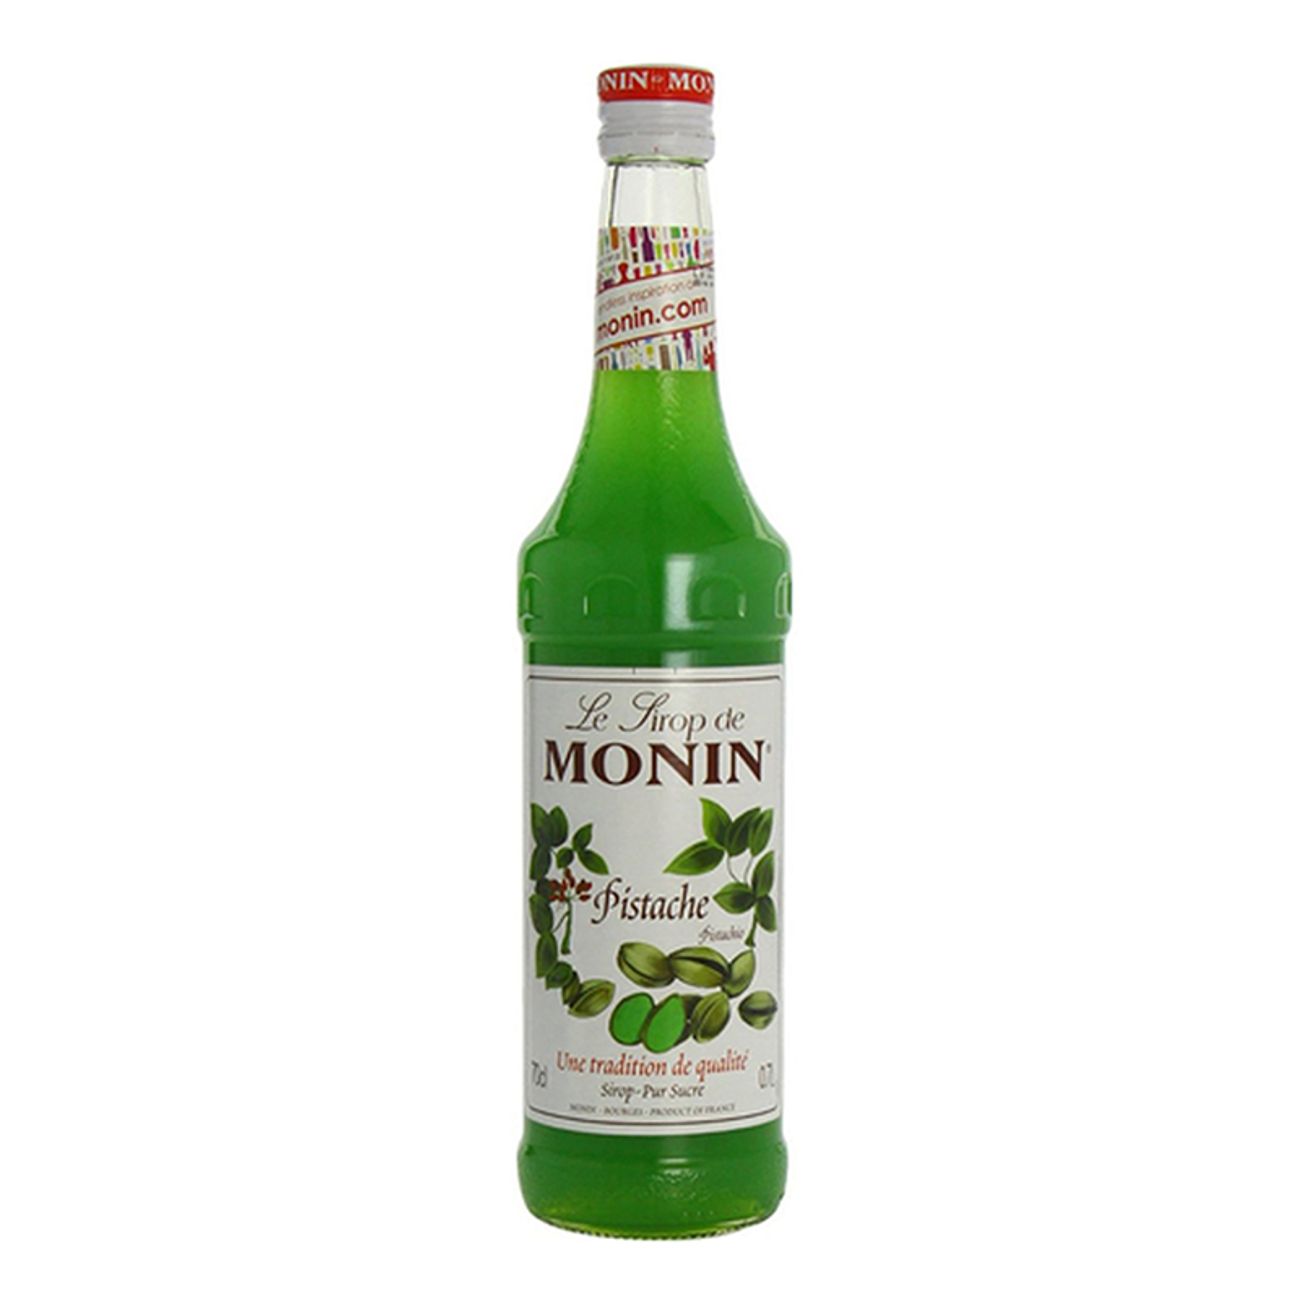 monin-pistage-drinkmix-1